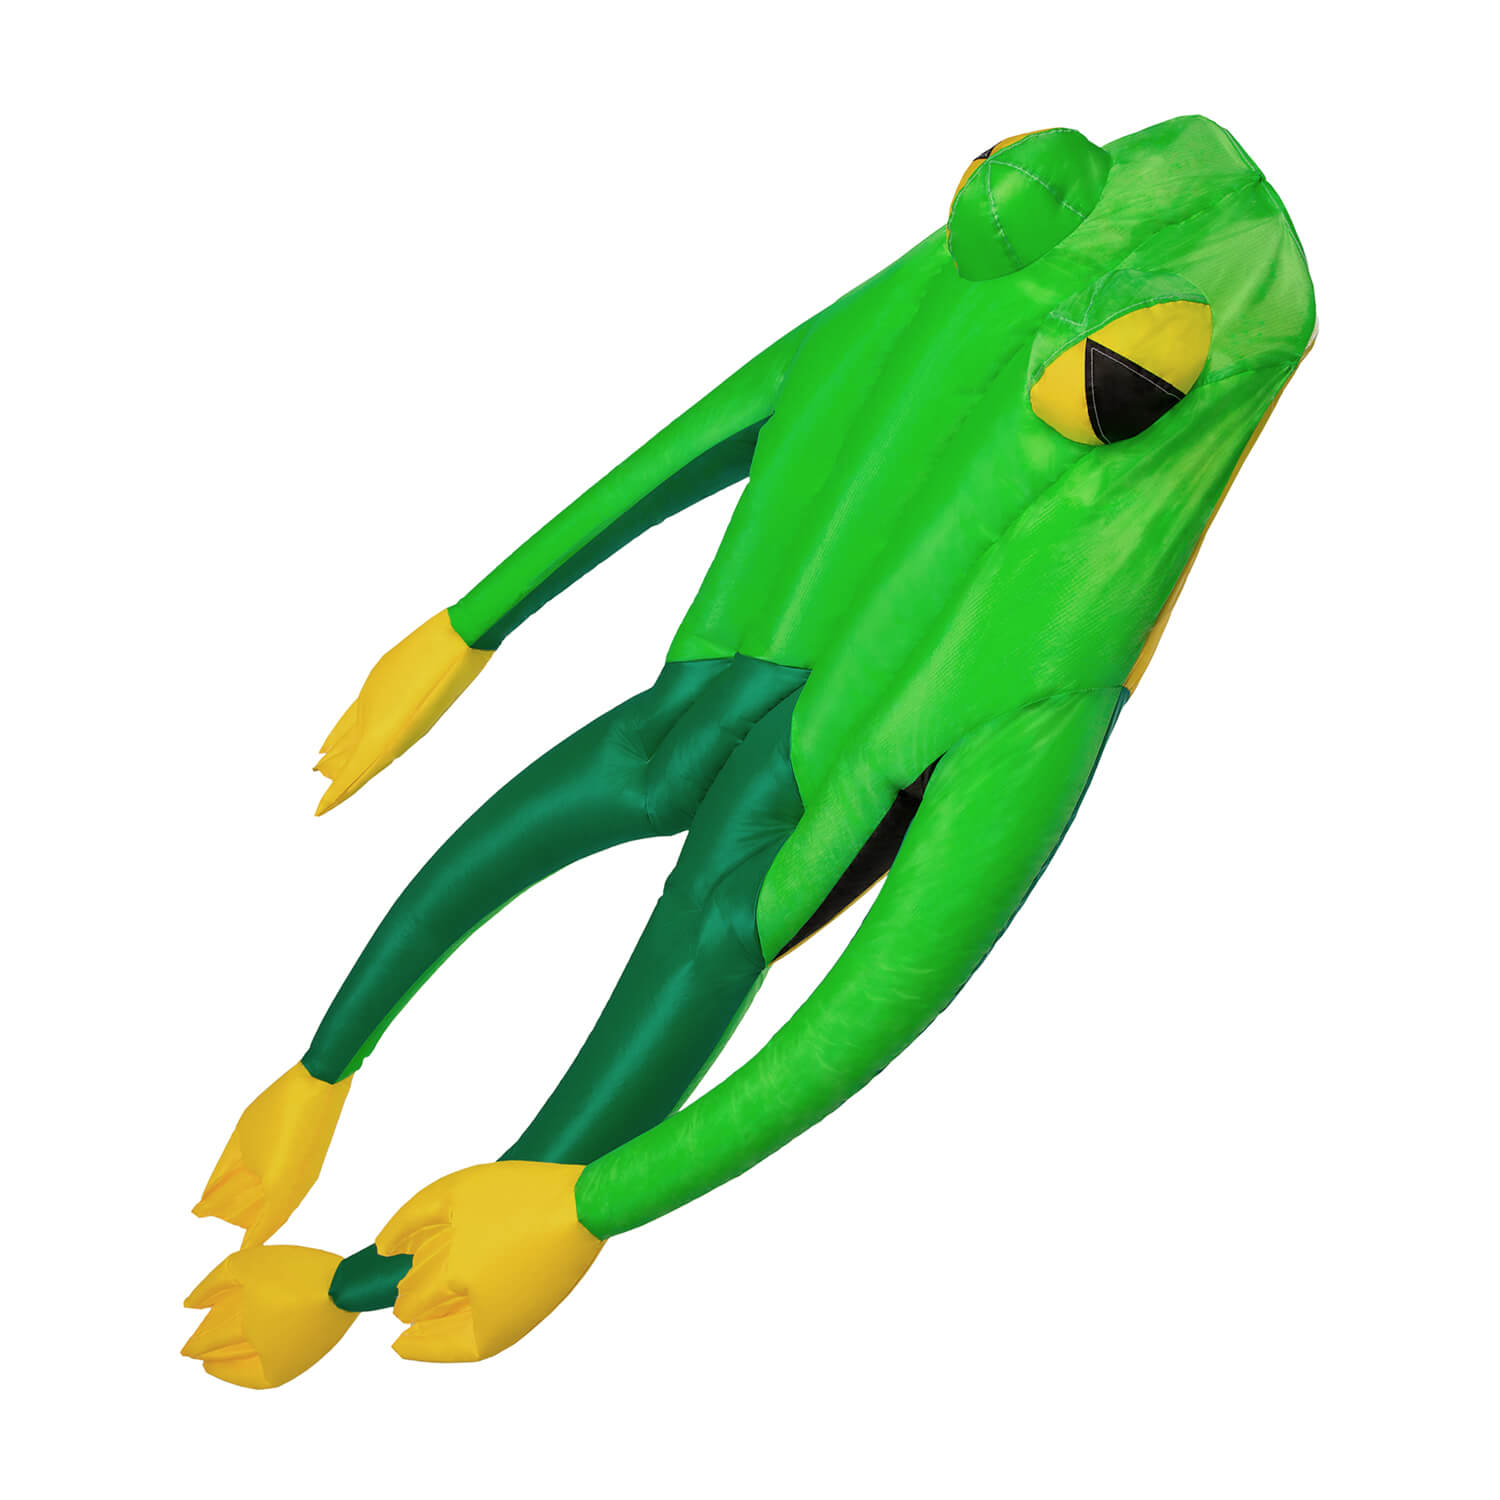 3D Drachen als grünen Frosch ohne Stangen kaufen!